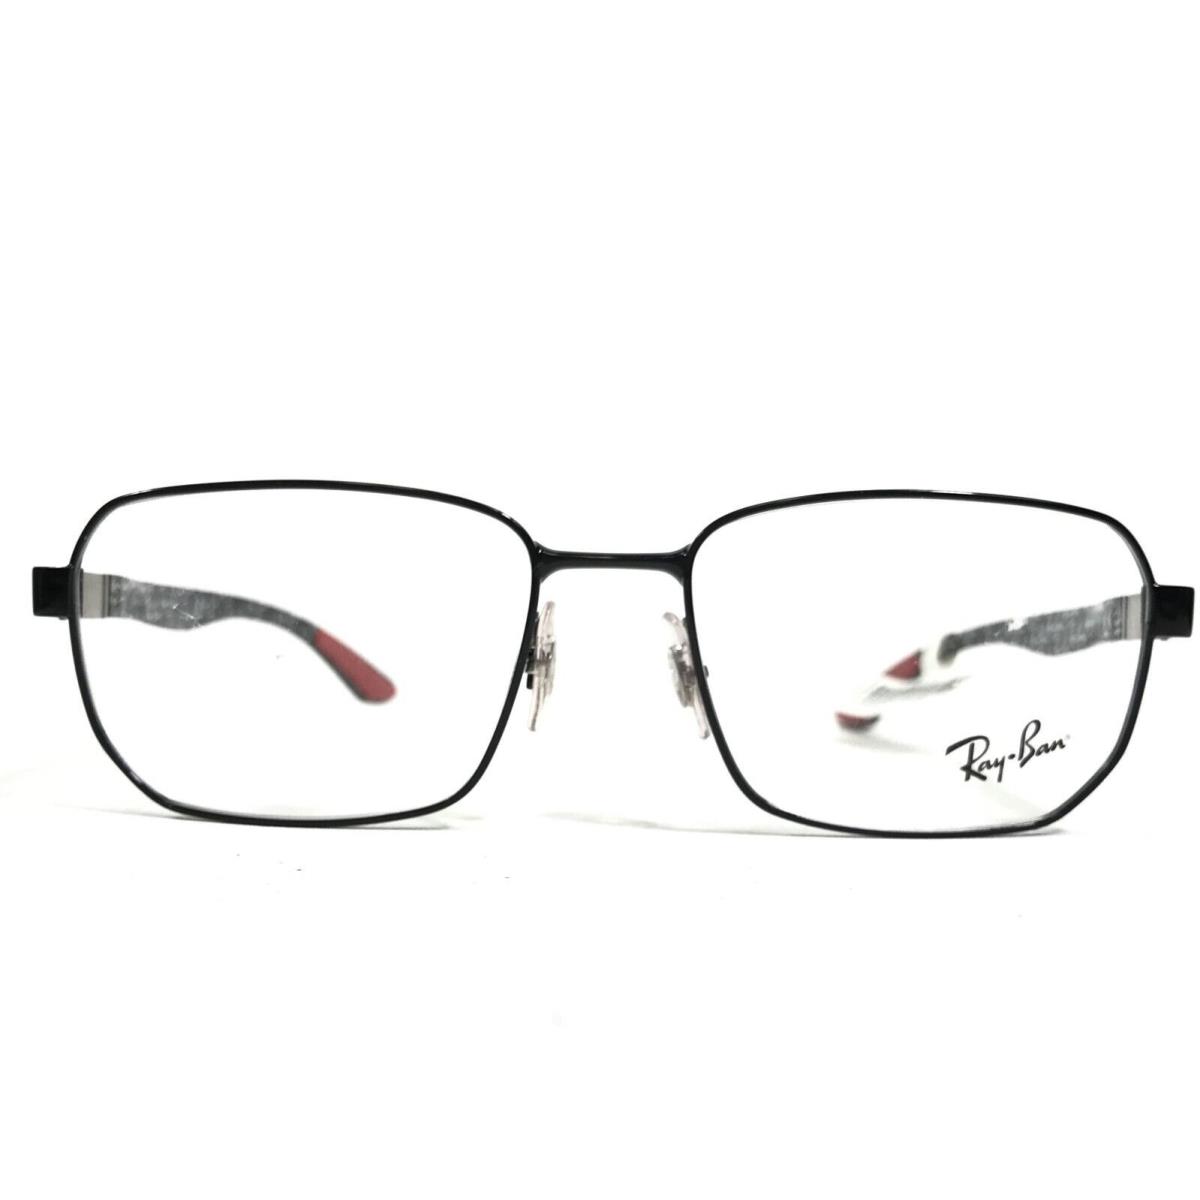 Ray-ban Eyeglasses Frames RB8419 2509 Black Square Carbon Fiber Square 54-17-145